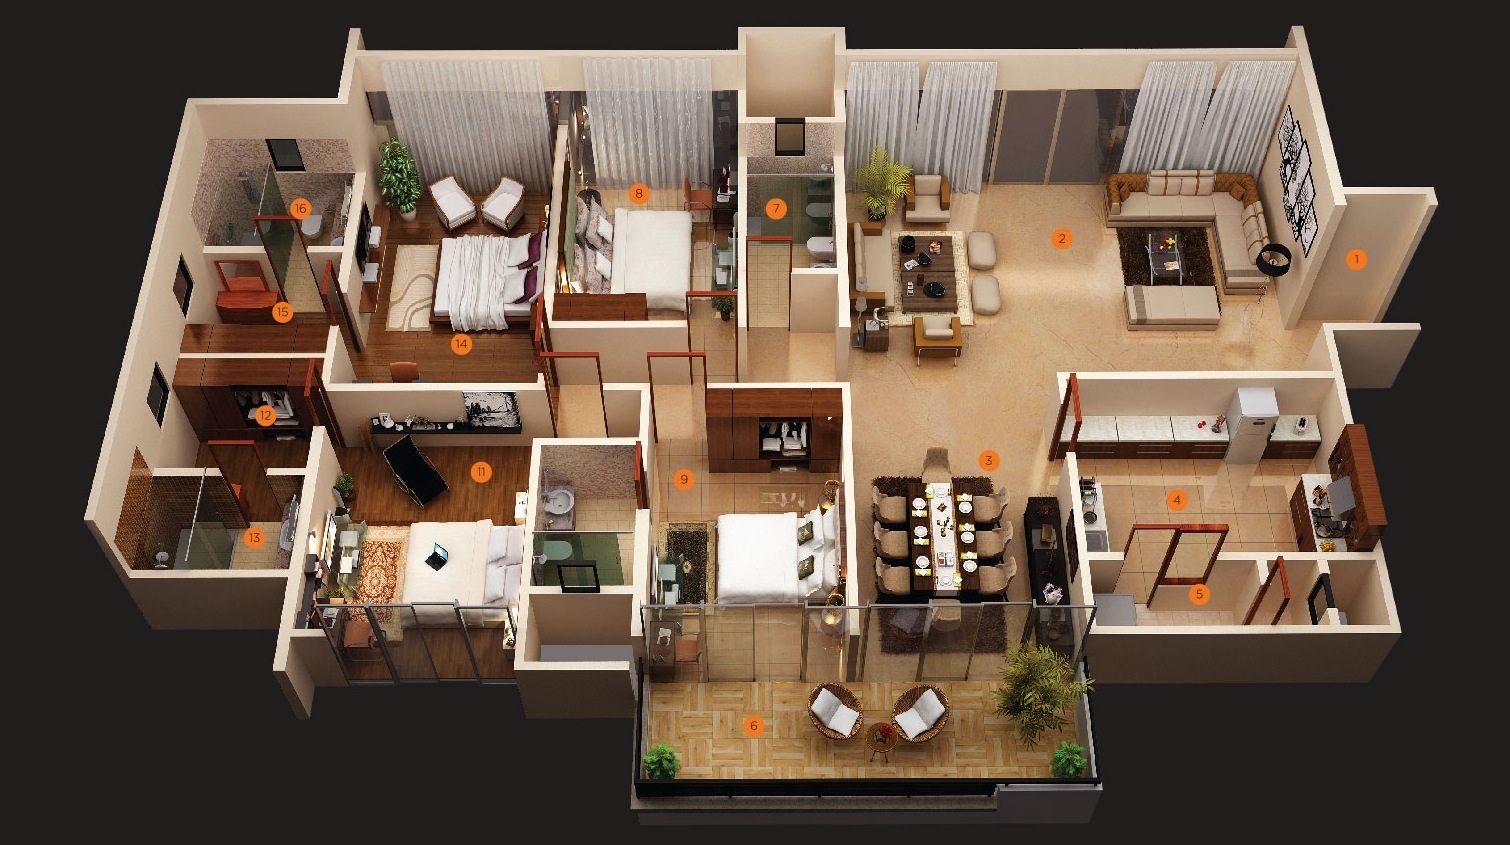 four-bedroom-decor-ideas.jpeg (JPEG Image, 1510 × 845 pixels) – Scaled (71%)